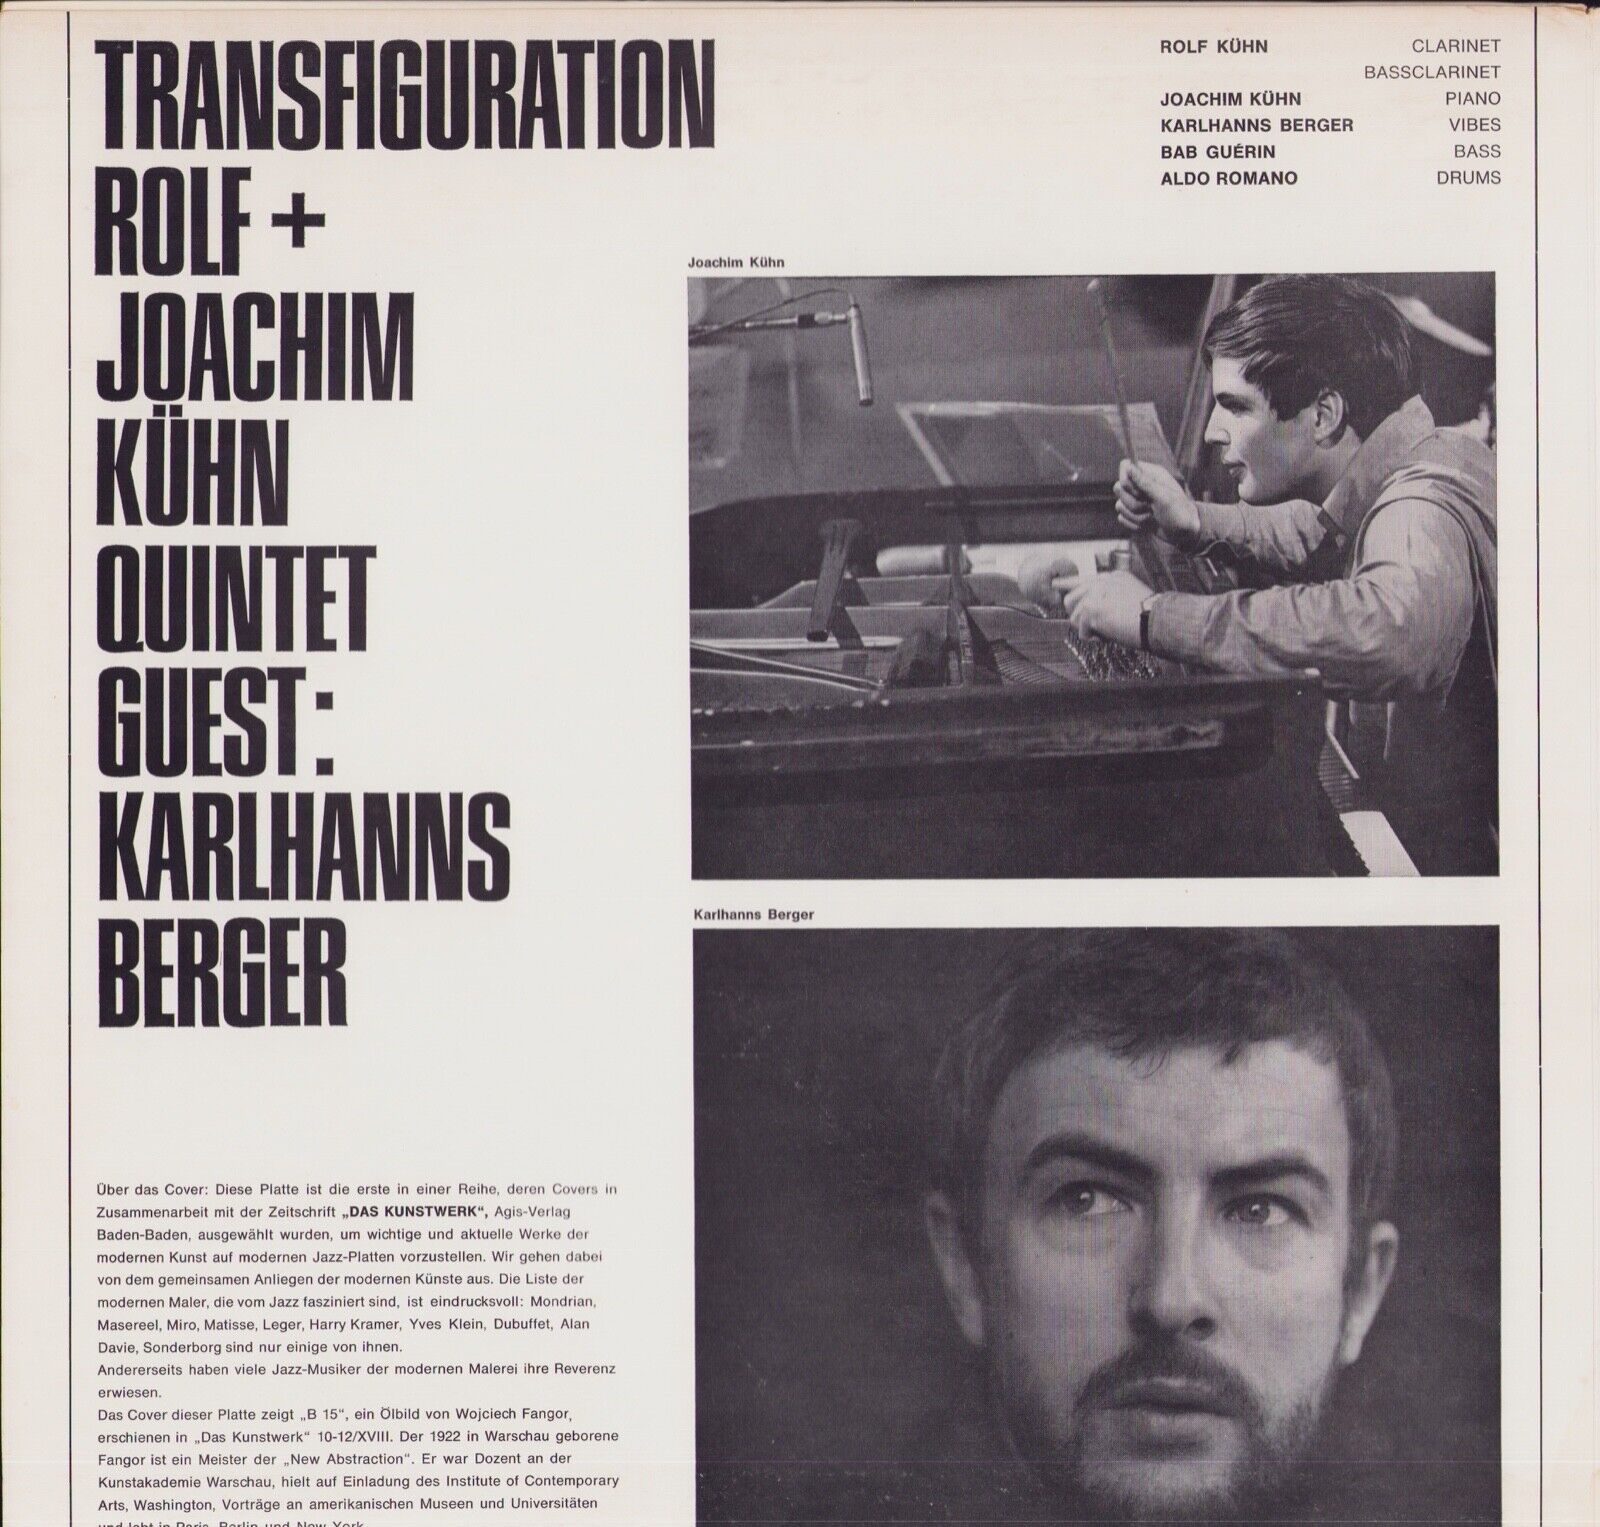 Rolf + Joachim Kühn Quintet Guest: Katharina Berger - Transfiguration Vinyl LP